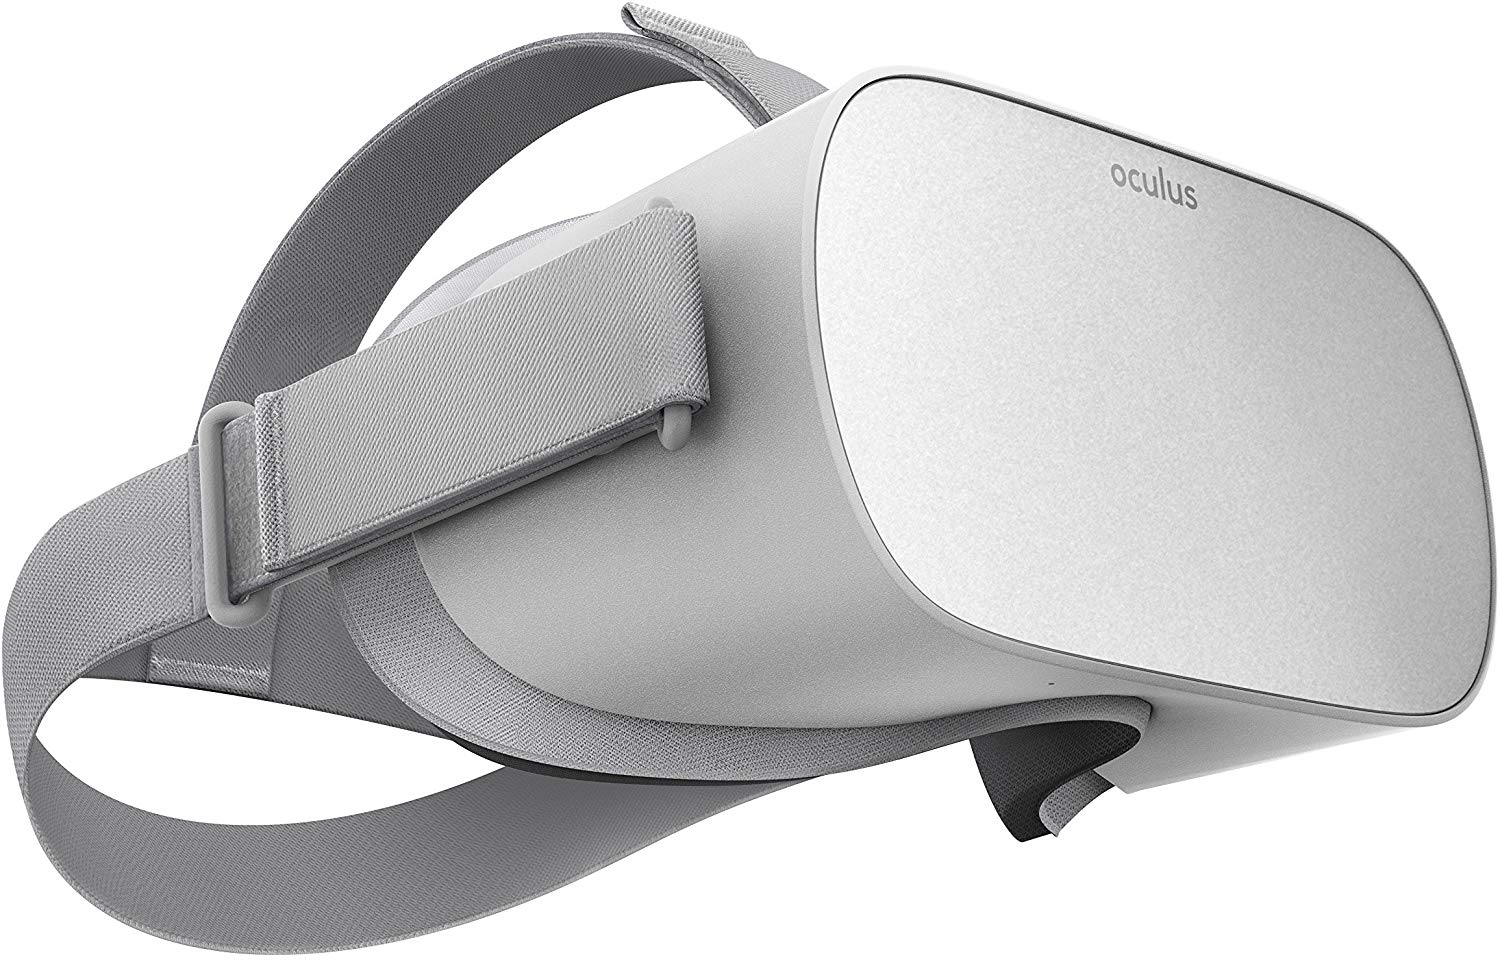 Virtual Reality – Oculus Standalone VR Headset